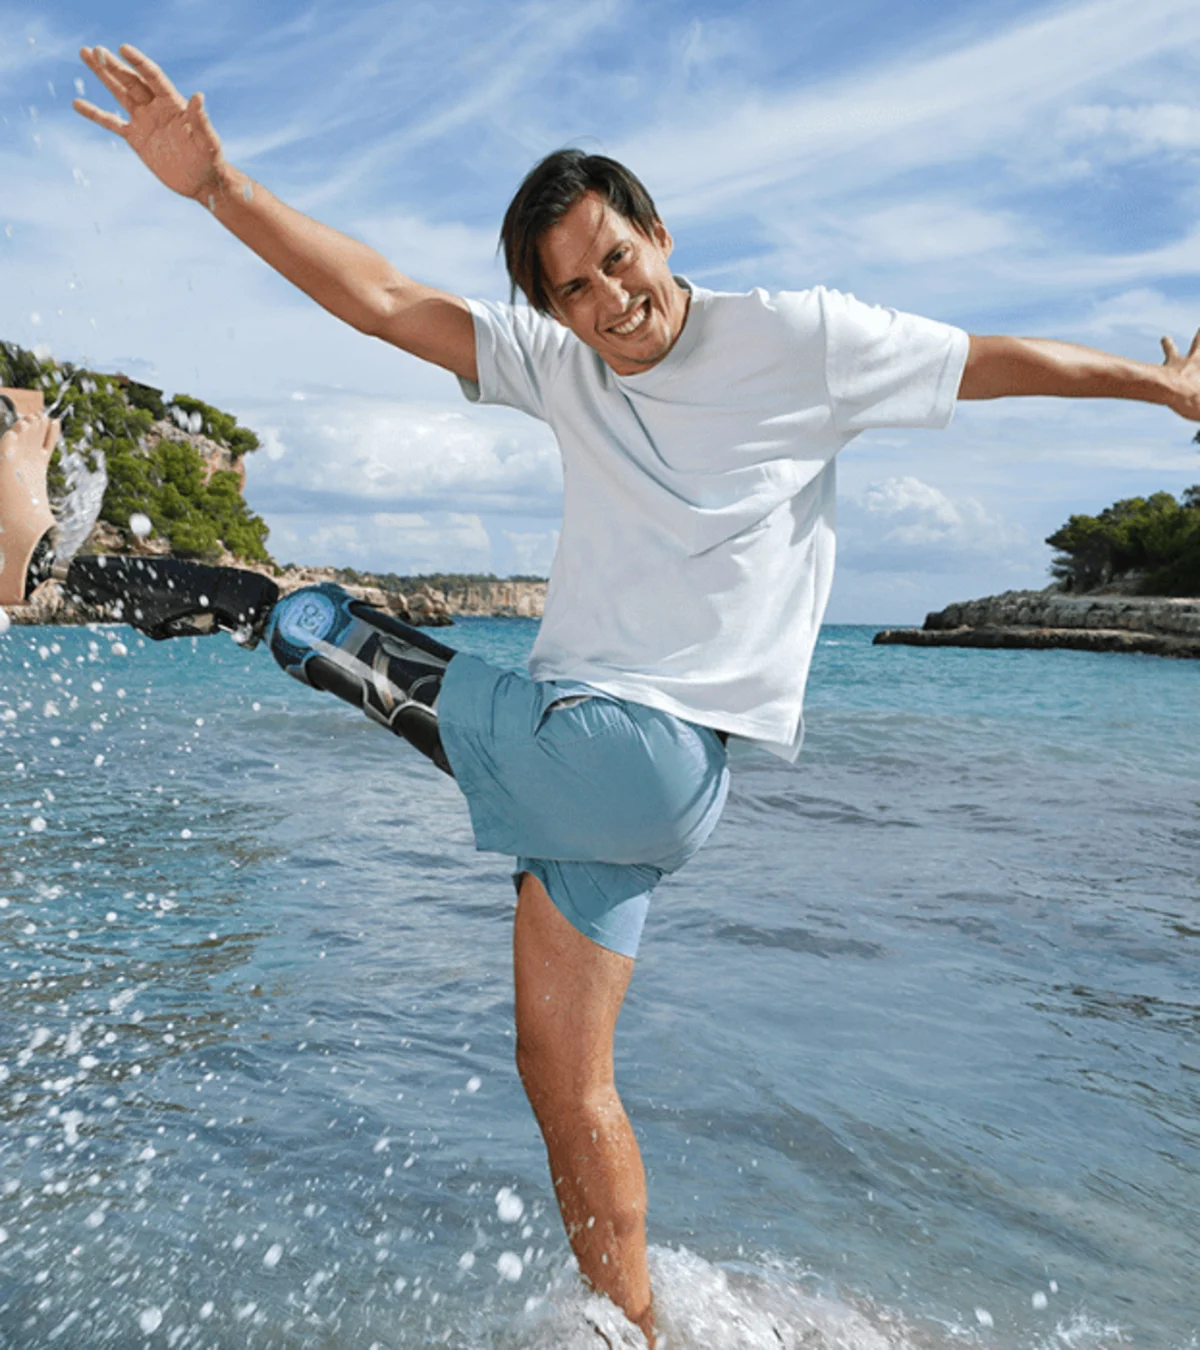 Alessandro swinging his Evanto prosthetic foot and Genium X3 prosthetic knee through the sea 